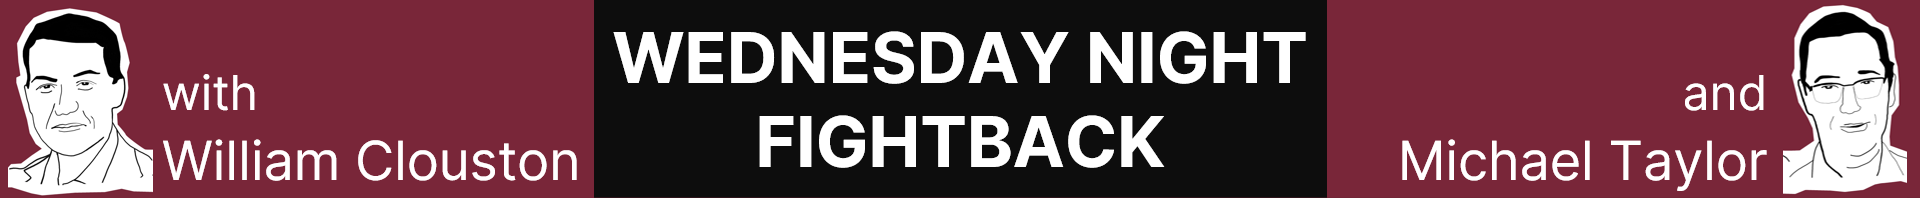 SDP - Wednesday Night Fightback banner